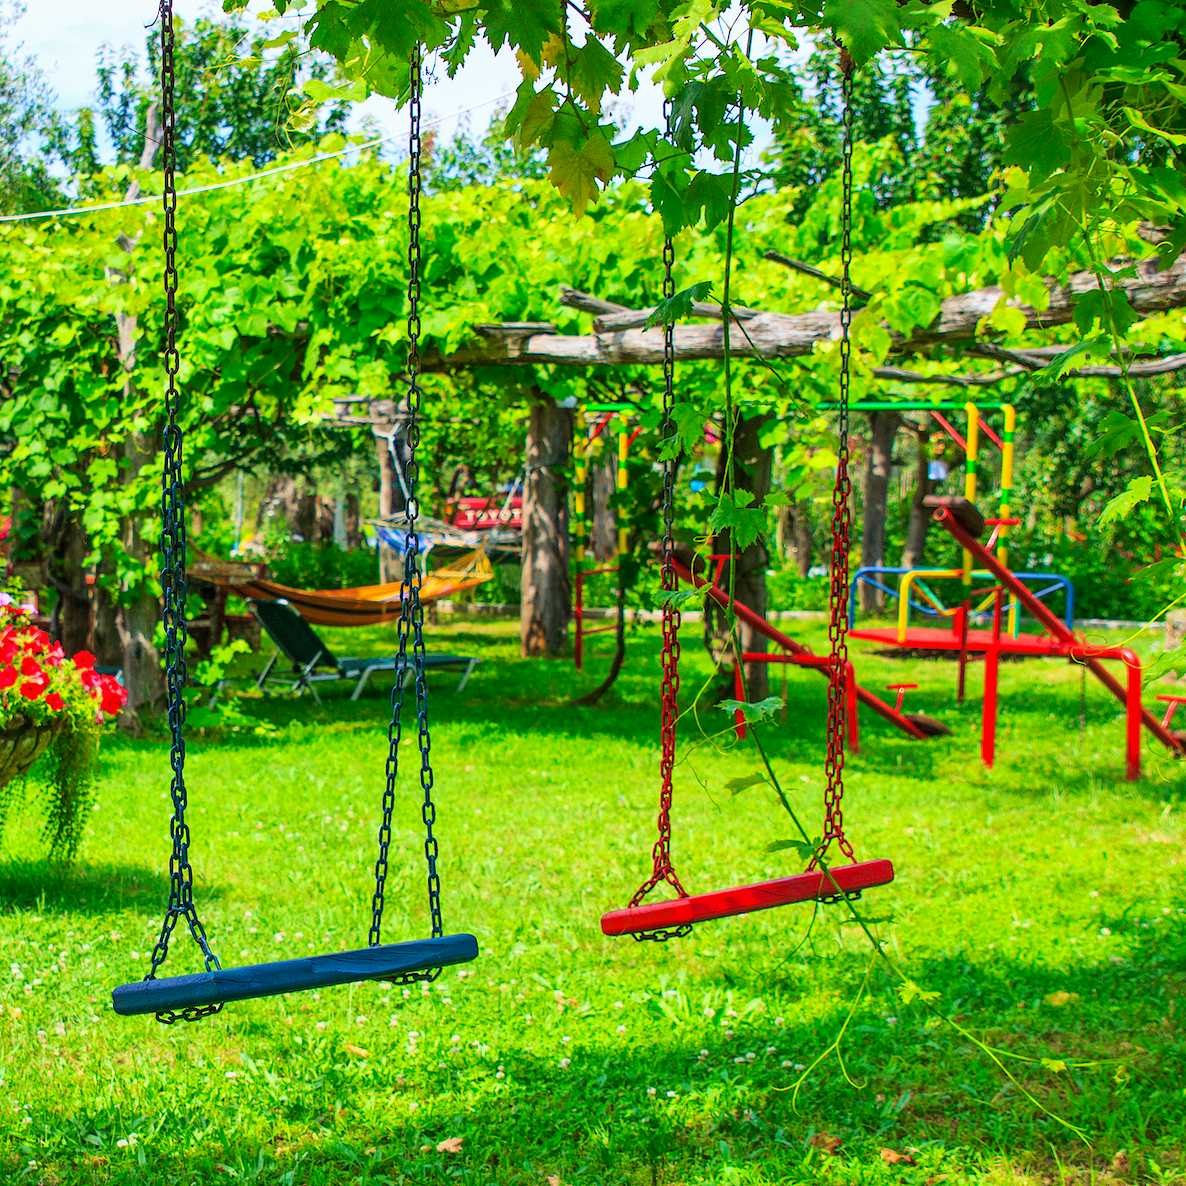 Photo Caption: Watch the children play safely in the garden's playground